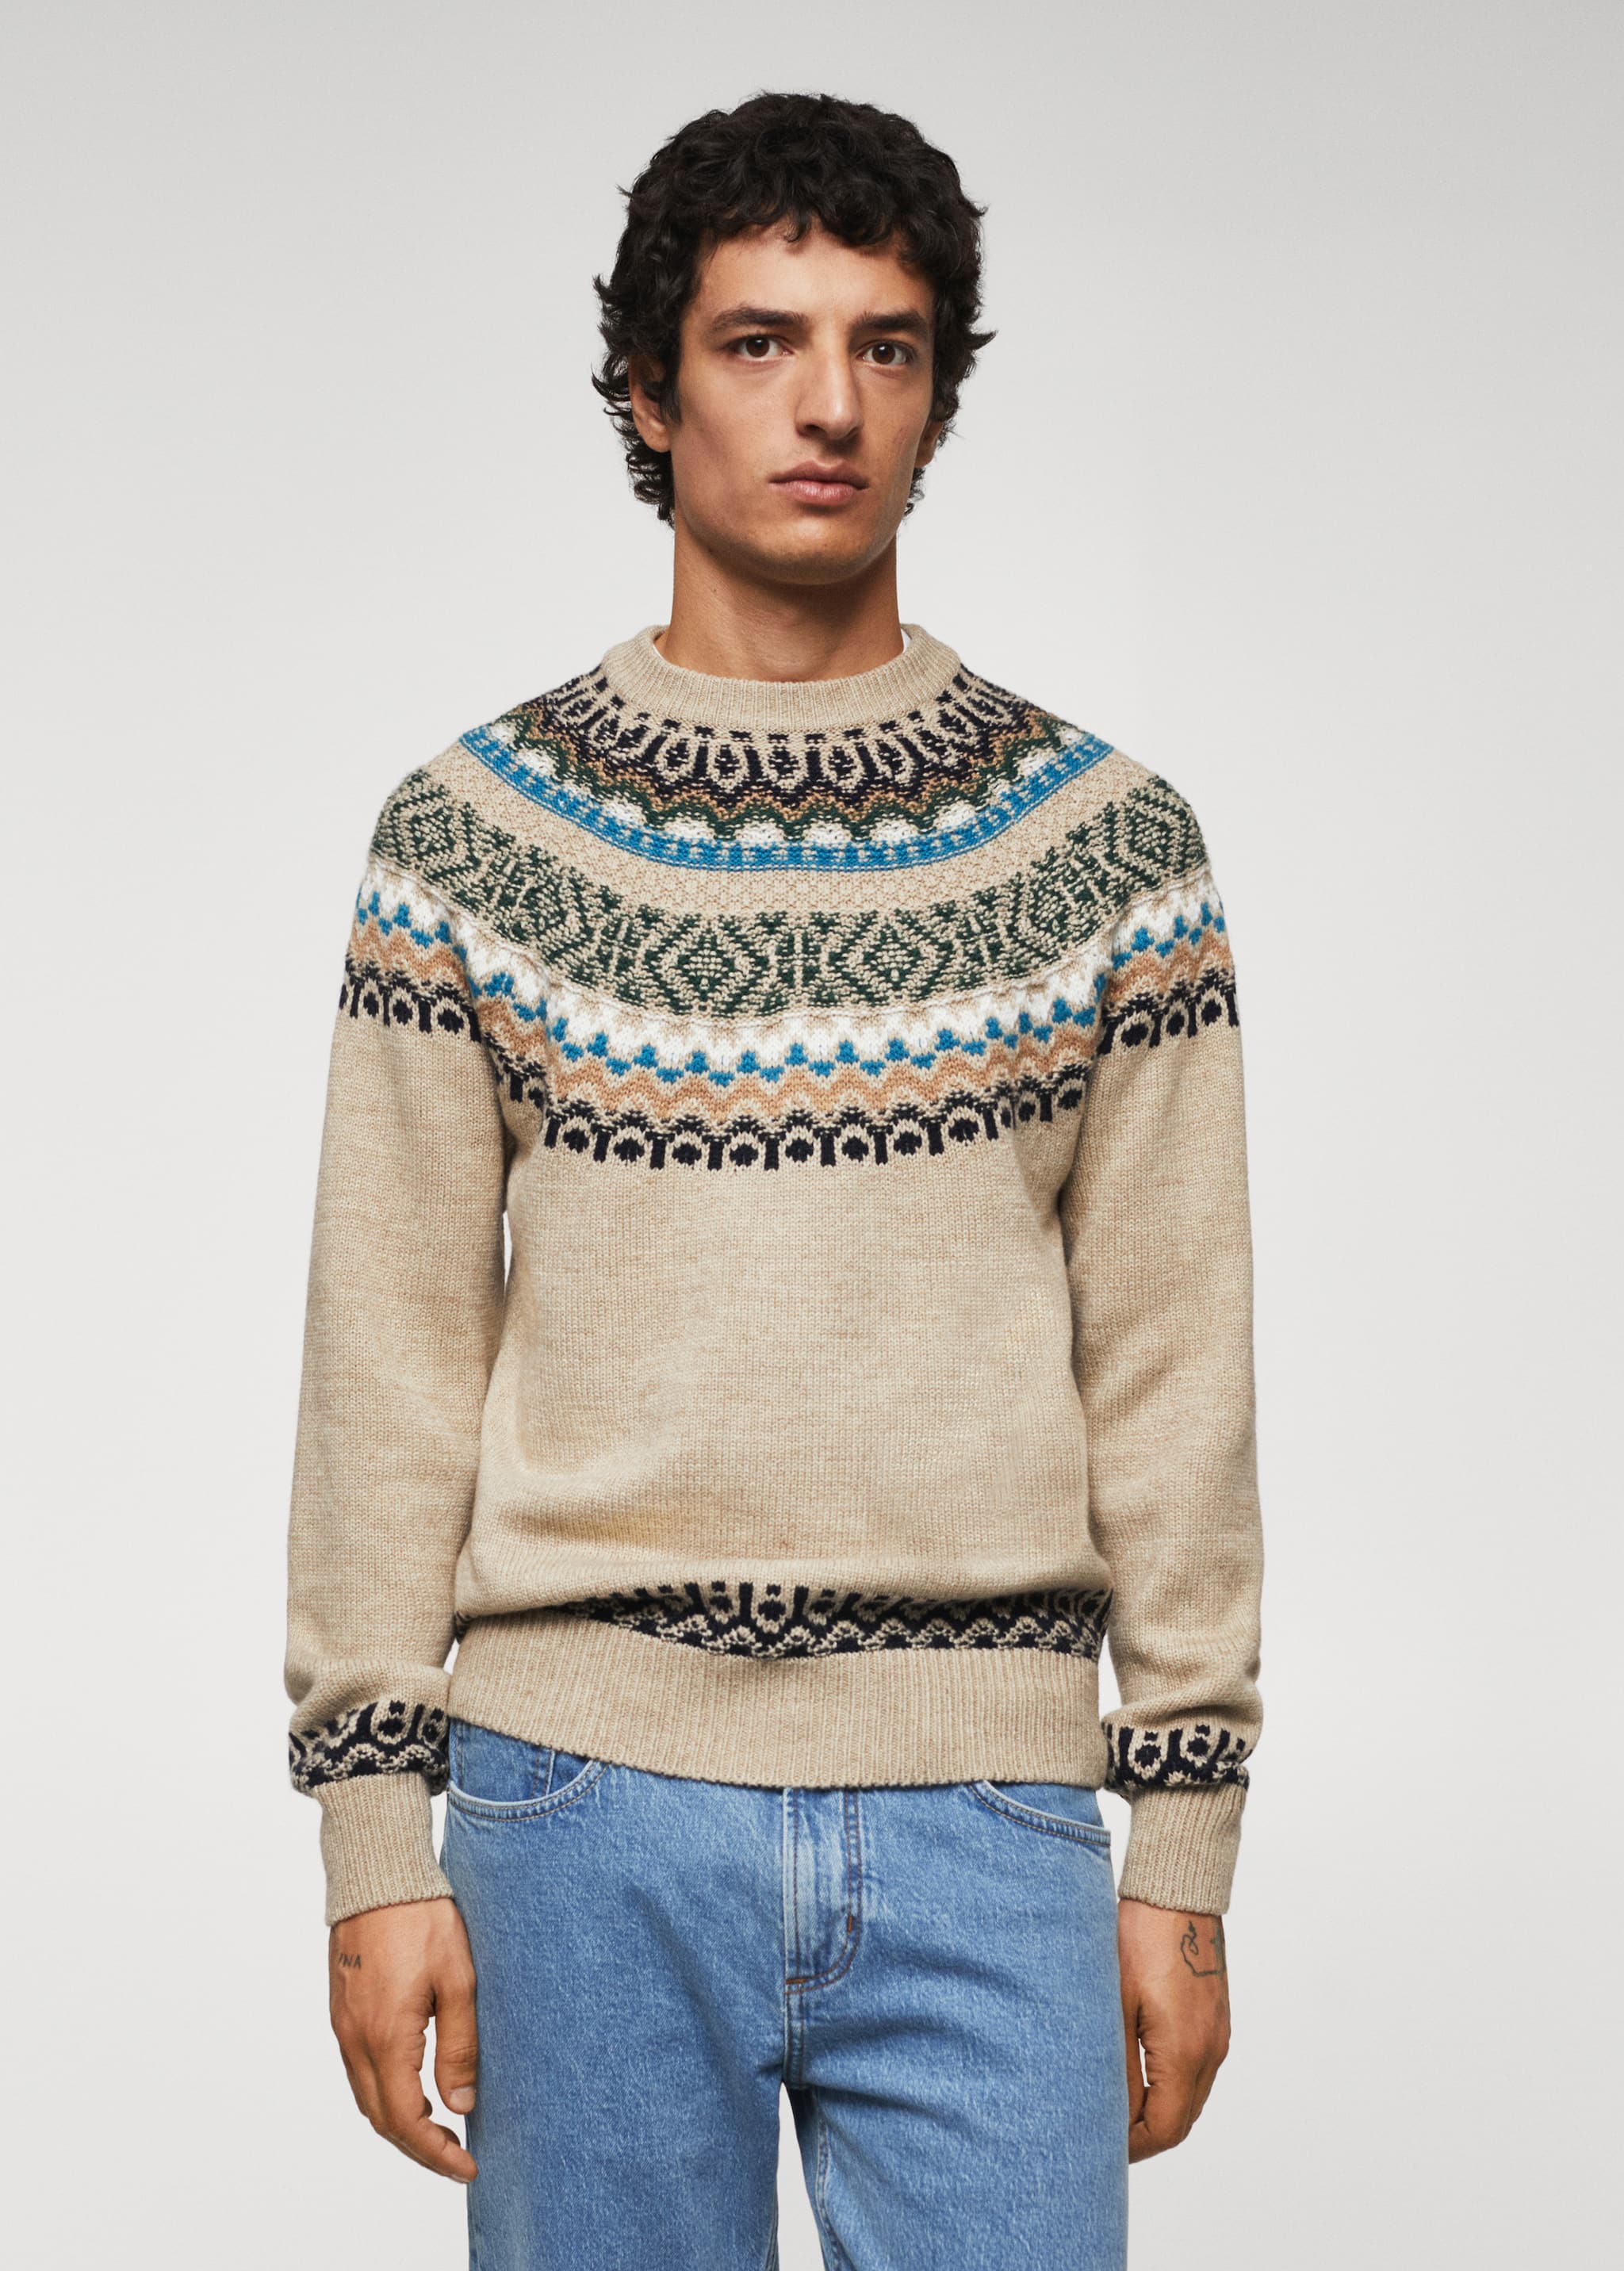 Jacquard wool sweater - Medium plane